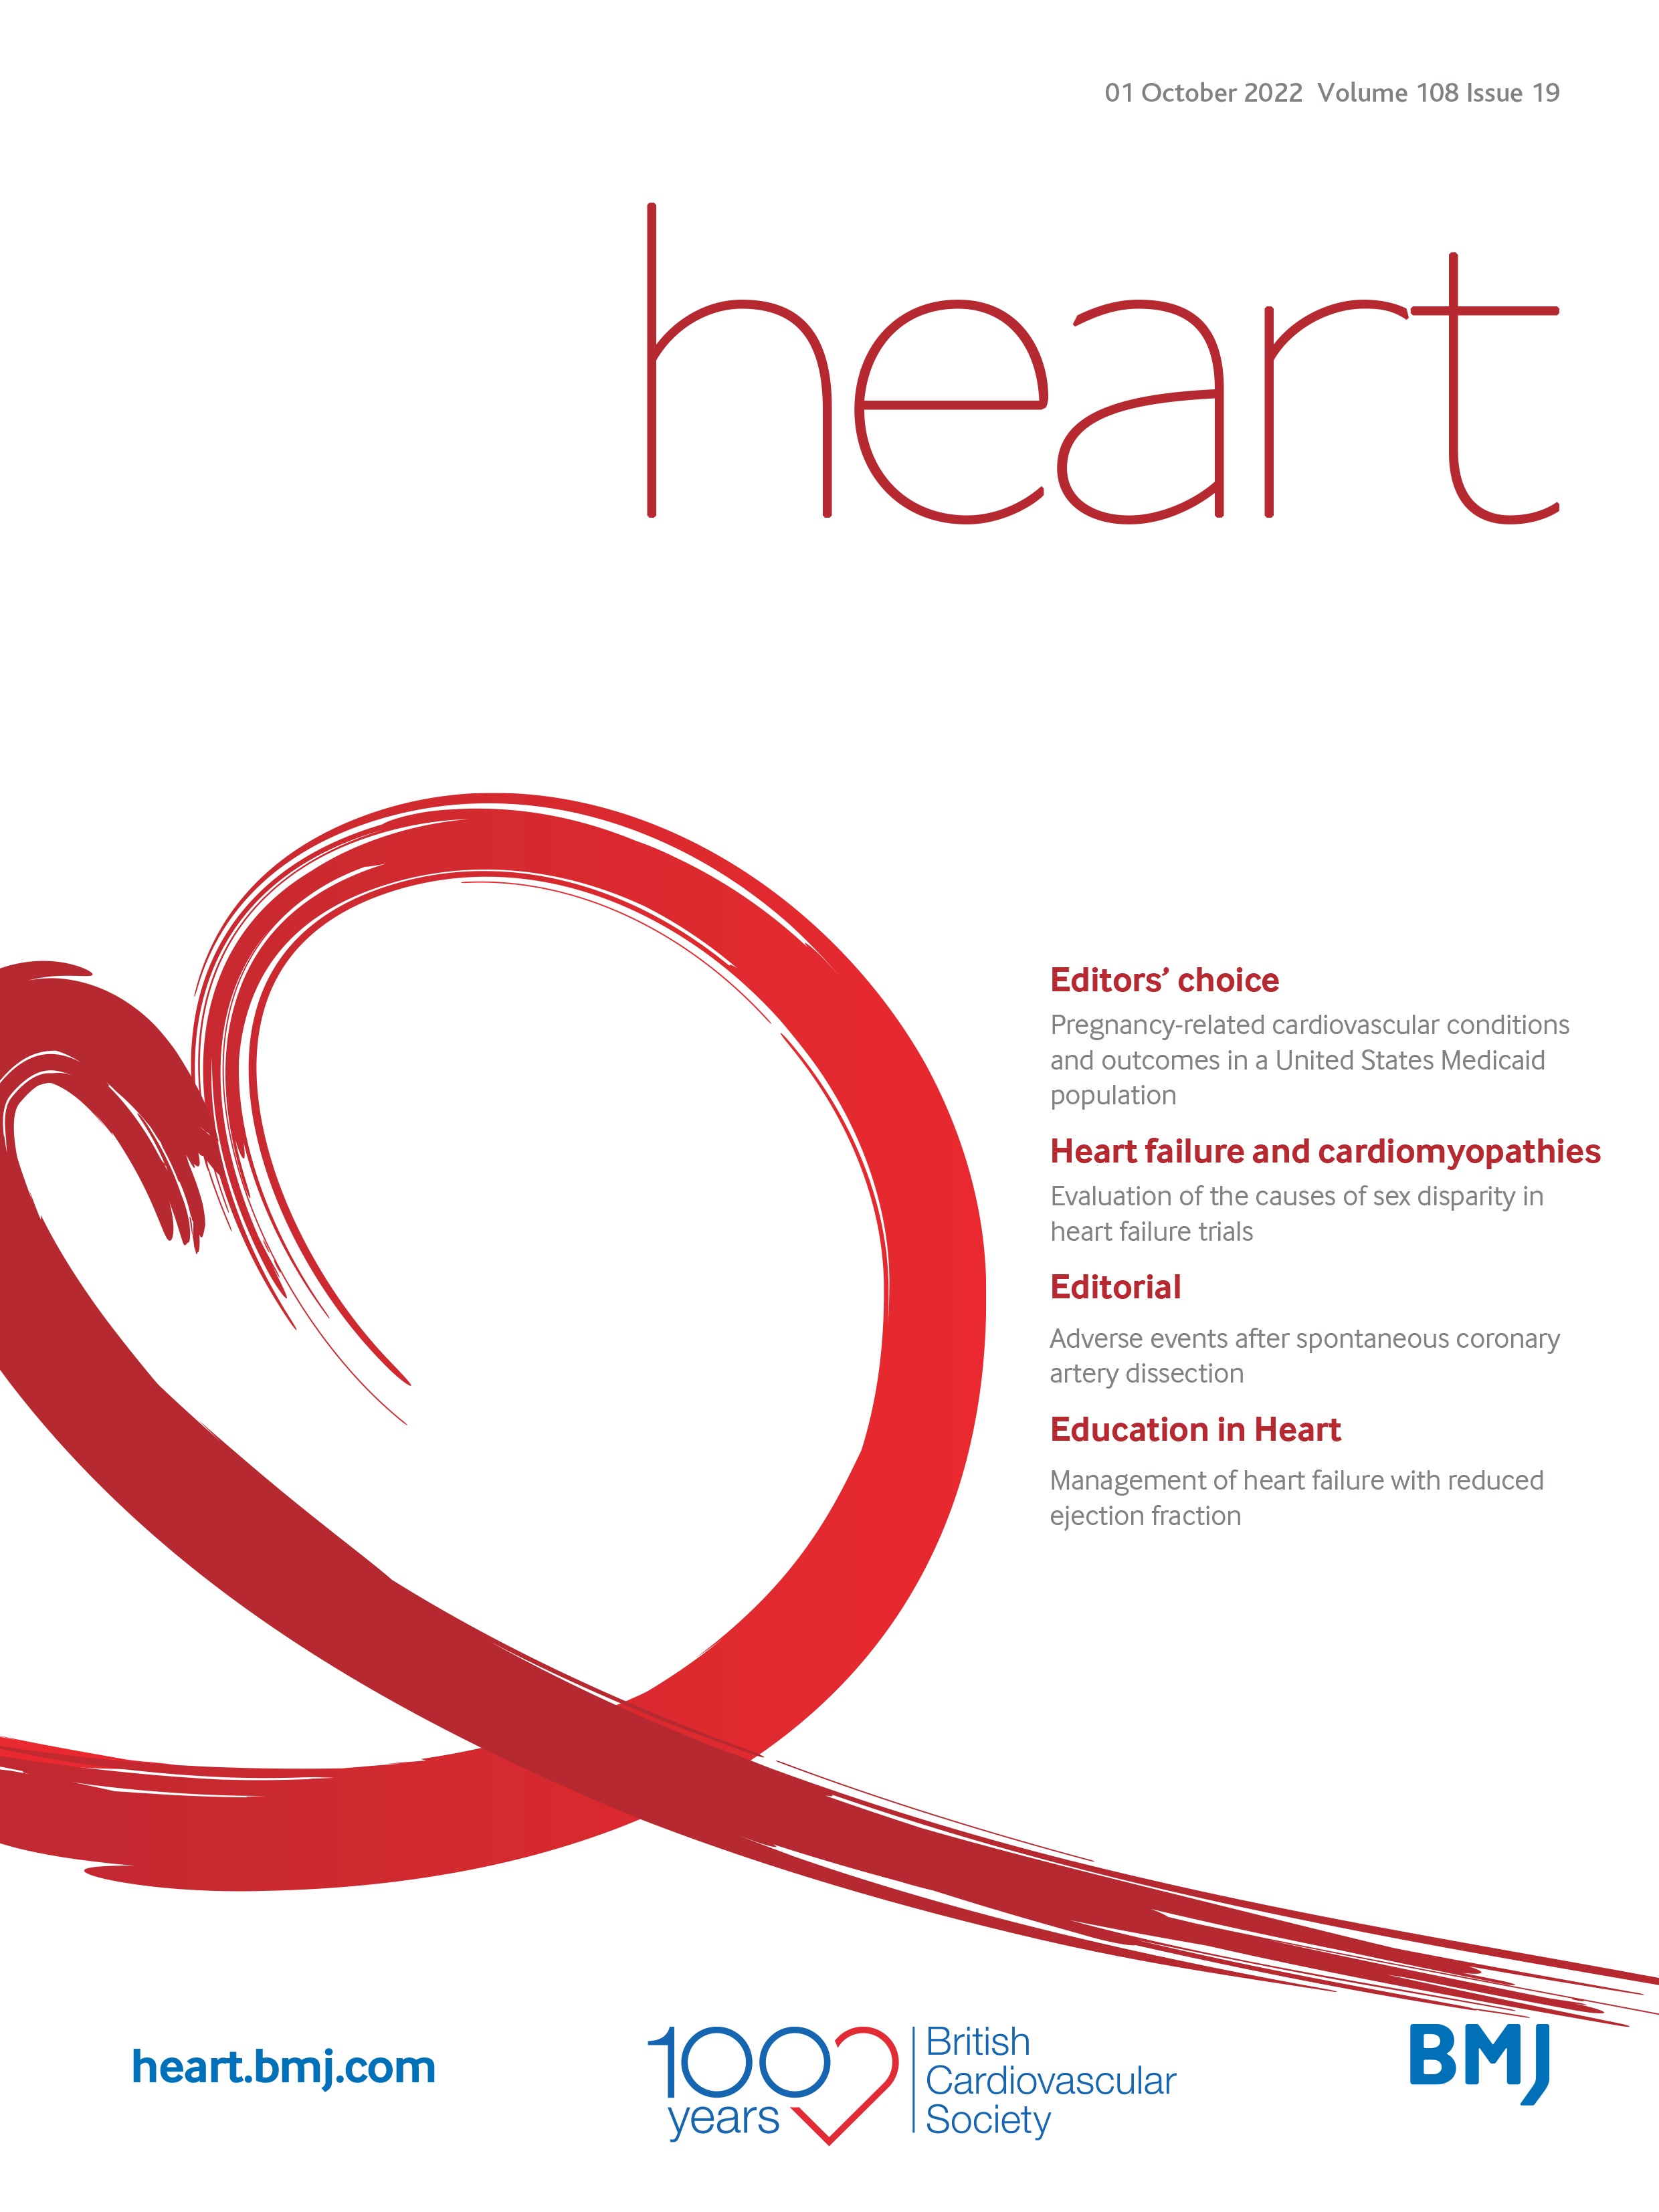 Disparities in cardiovascular maternal health